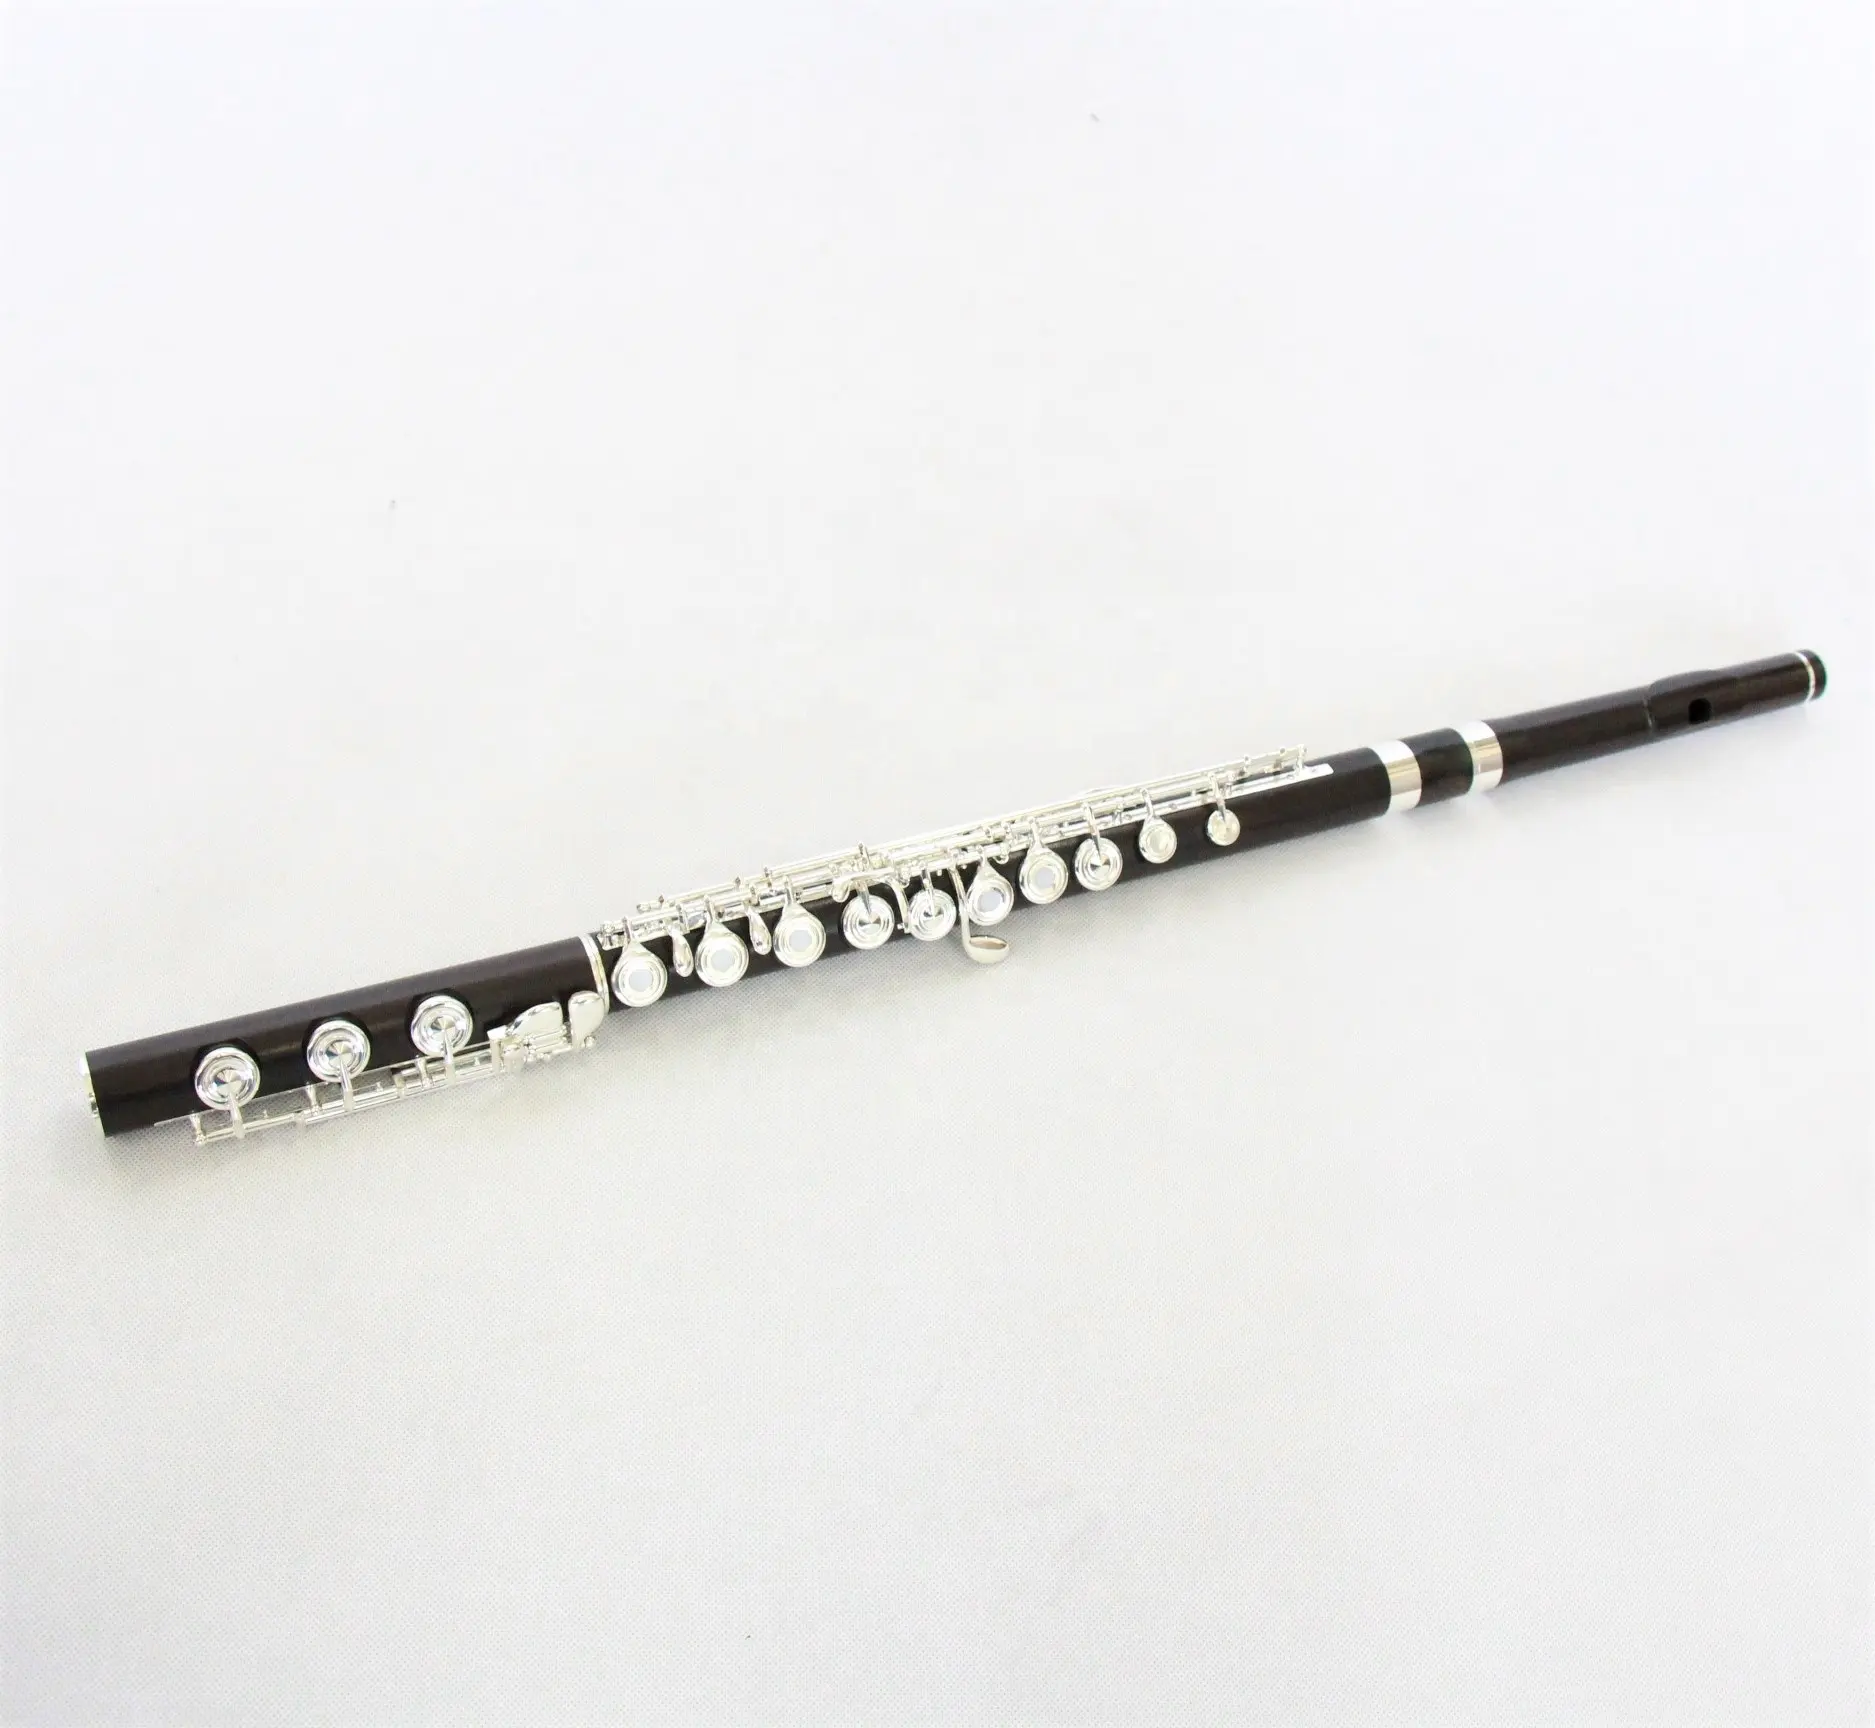 Flauta de ébano de gama alta hecha a mano china, flauta de instrumentos de viento de madera de grado superior